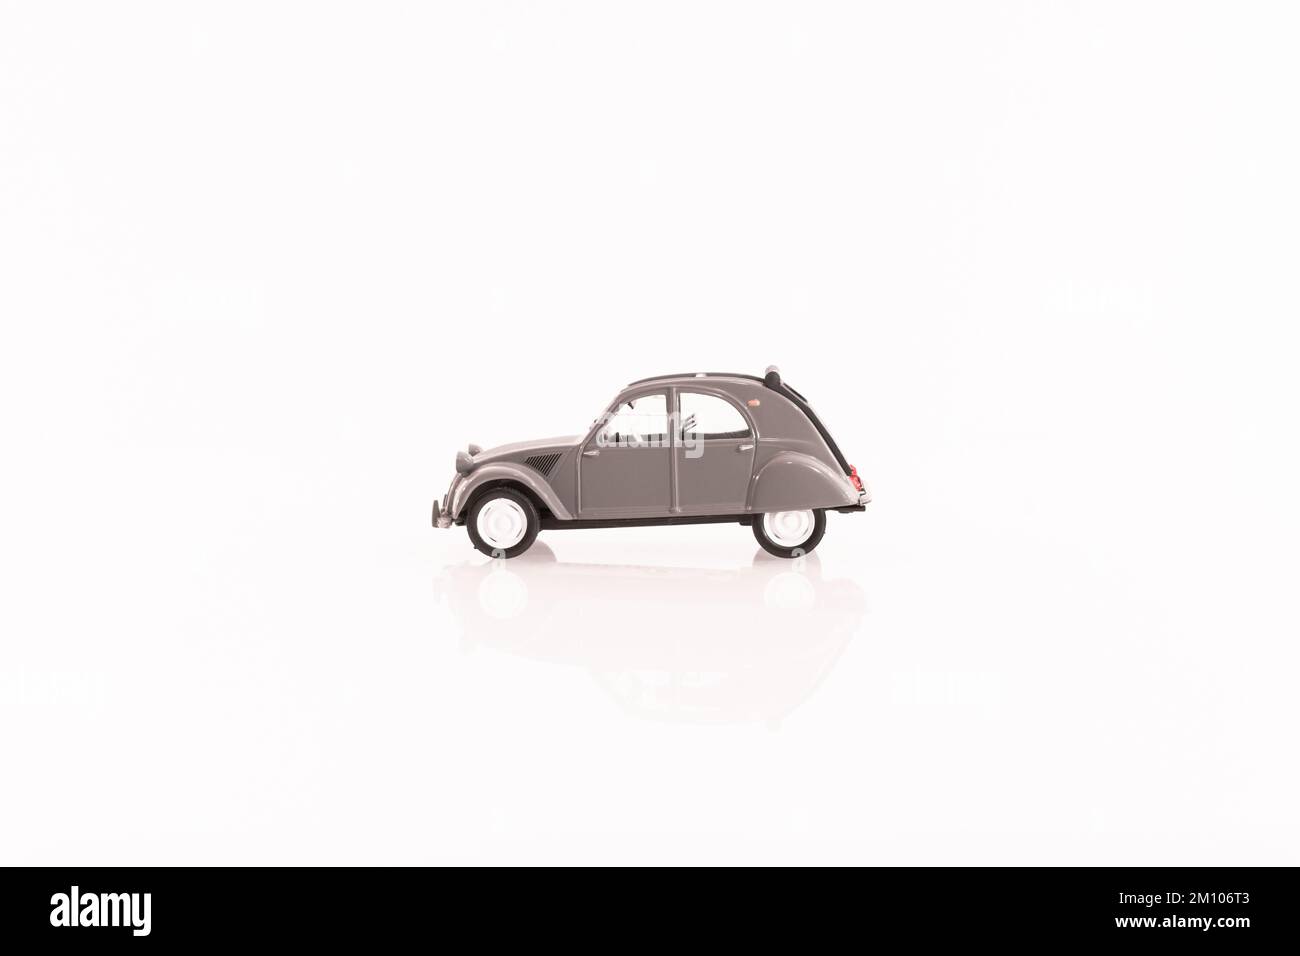 https://c8.alamy.com/comp/2M106T3/vintage-citroen-2cv-miniature-vehicle-in-metal-2M106T3.jpg